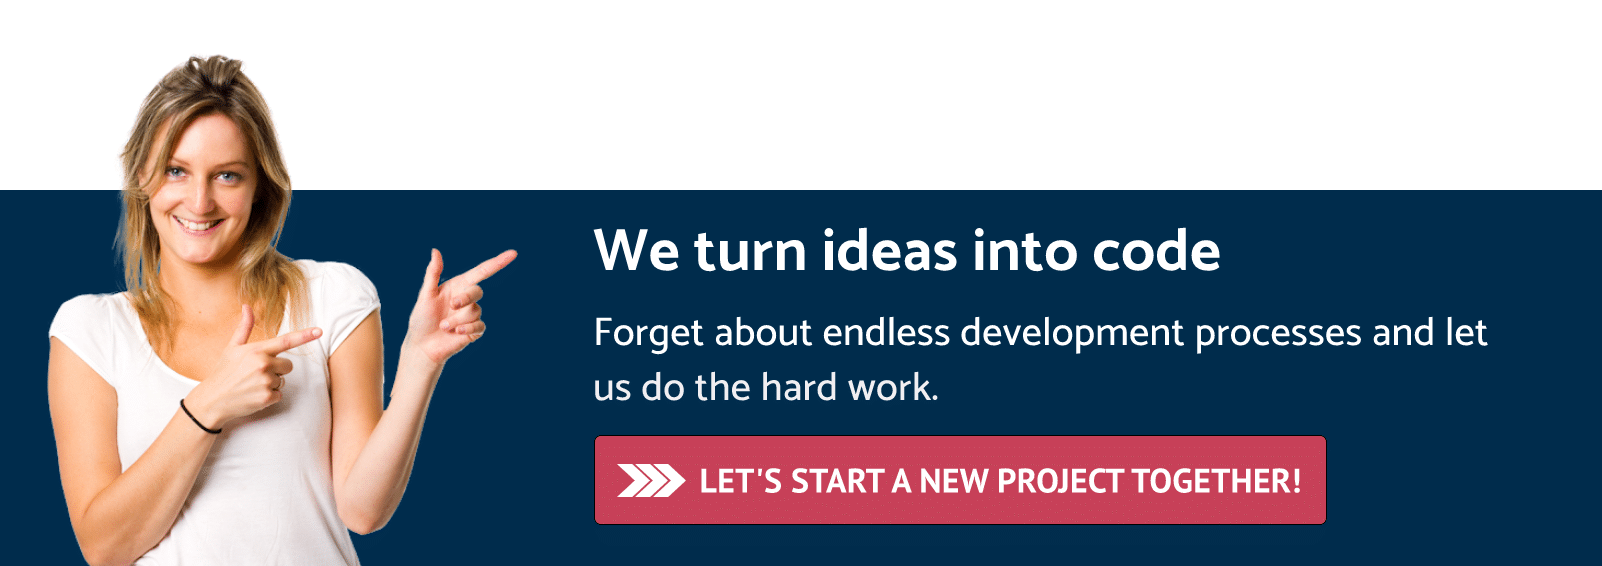 We-turn-ideas-into-code-CTA